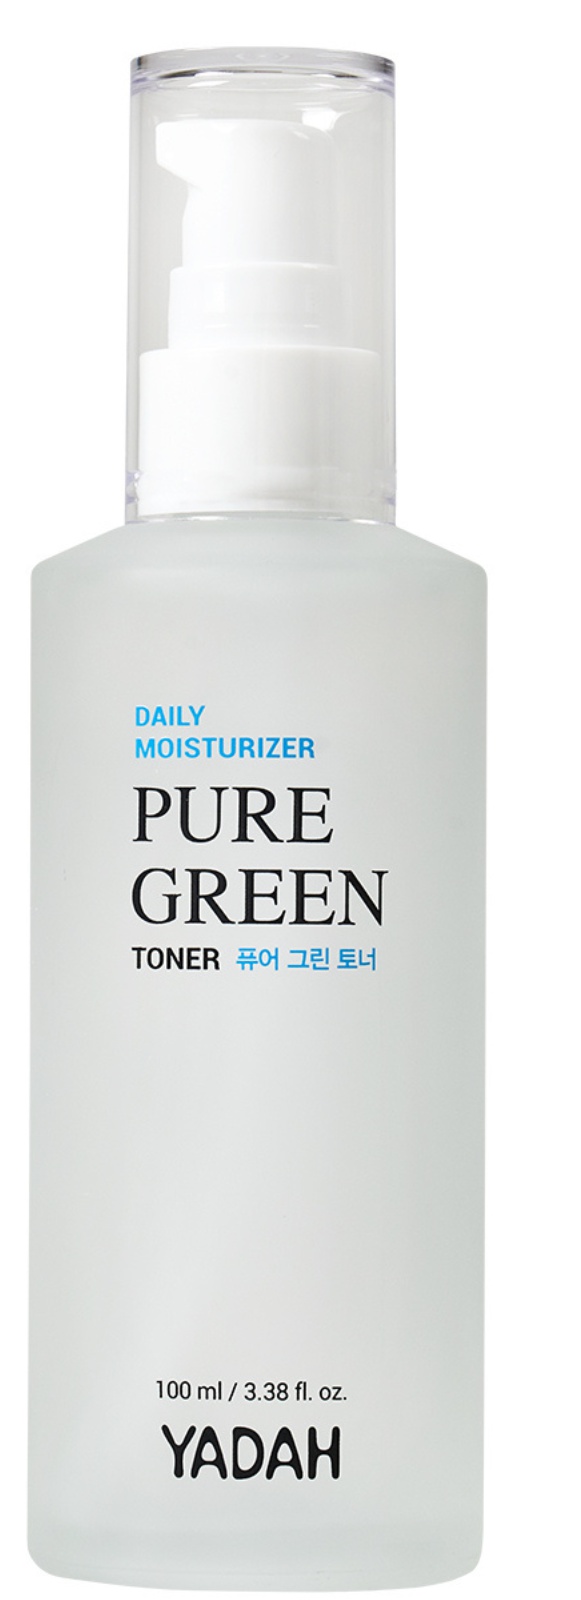 Yadah Pure Green Daily Moisturizer Toner